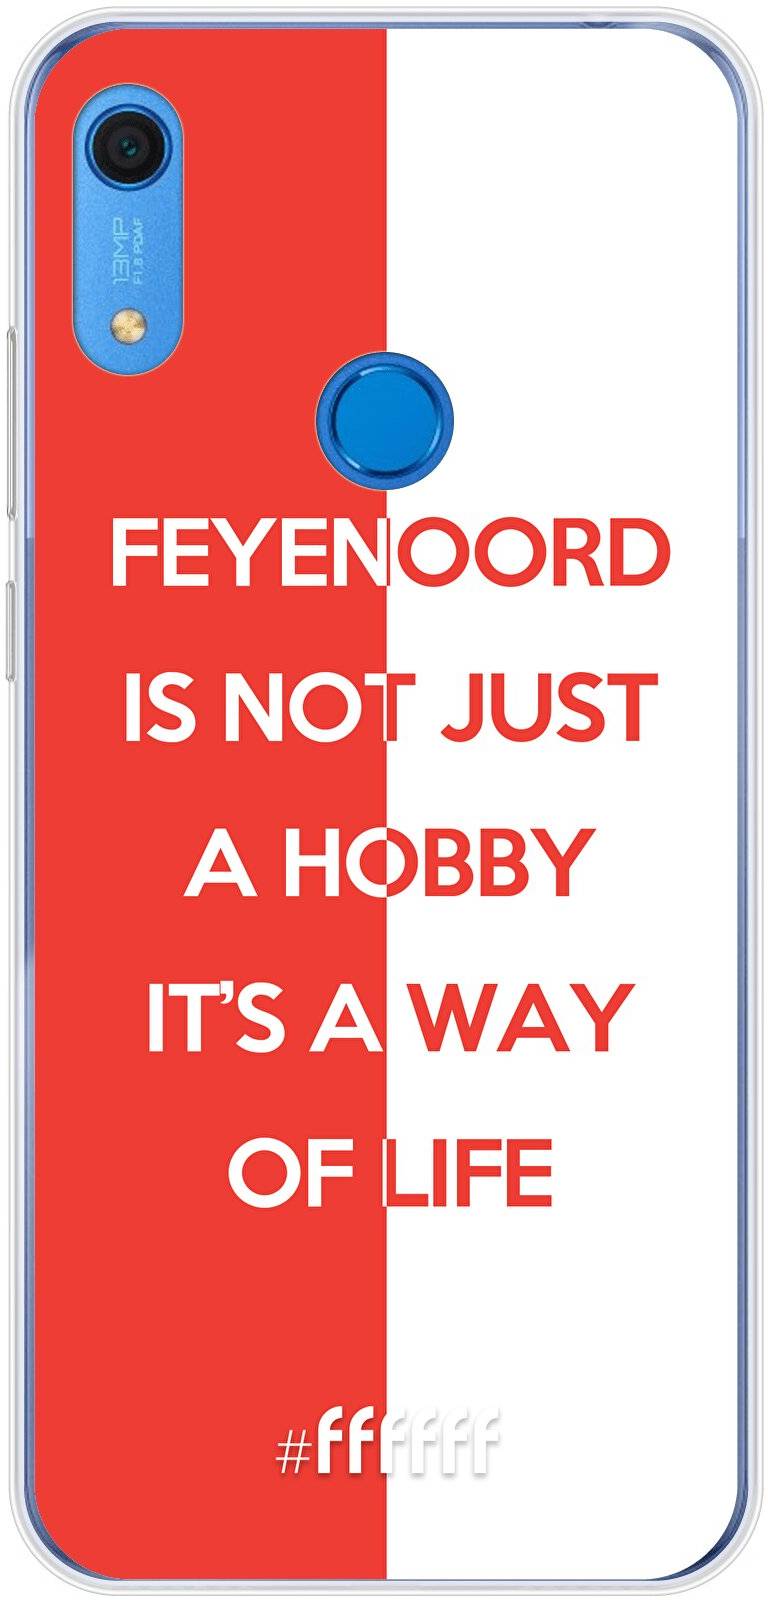 Feyenoord - Way of life Y6 (2019)